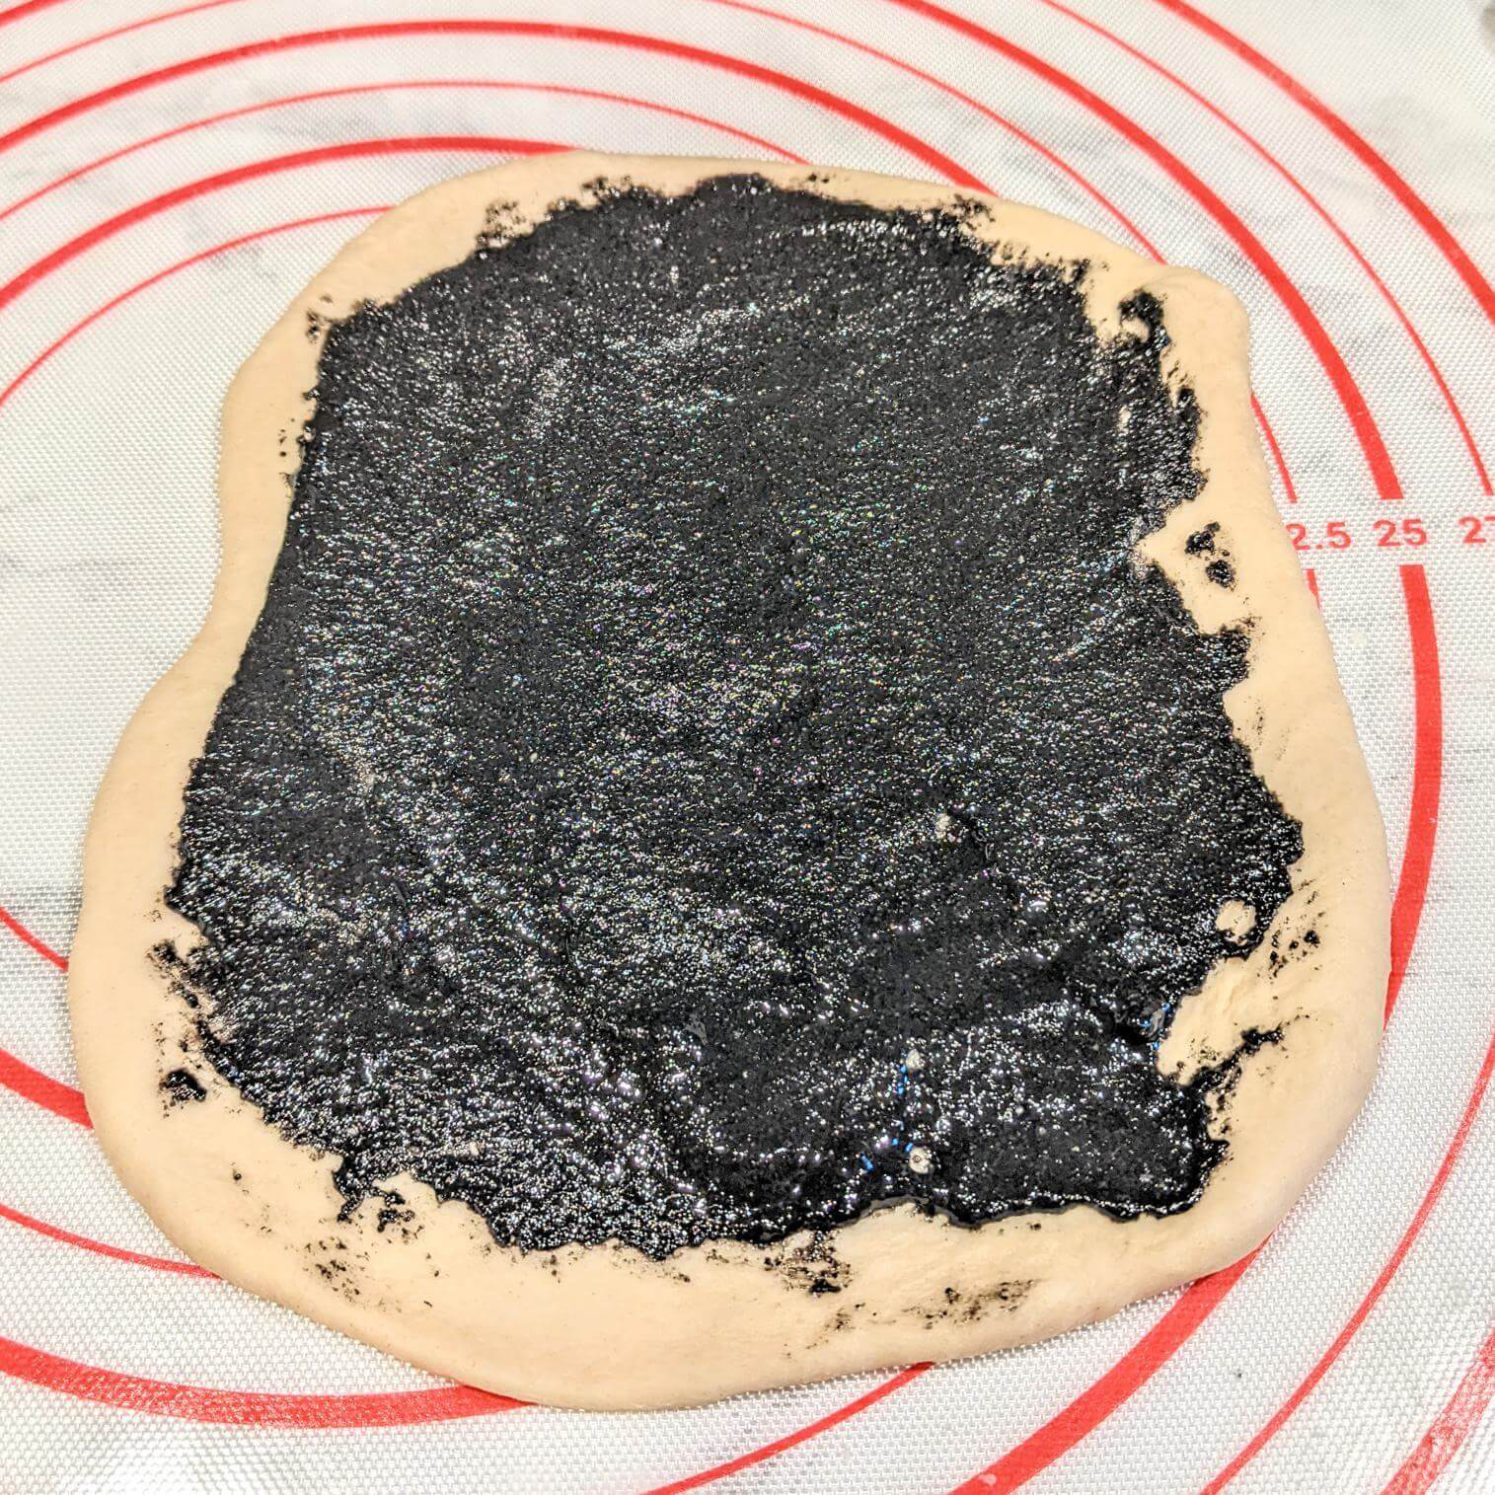 Black Sesame Paste Spread on Bread